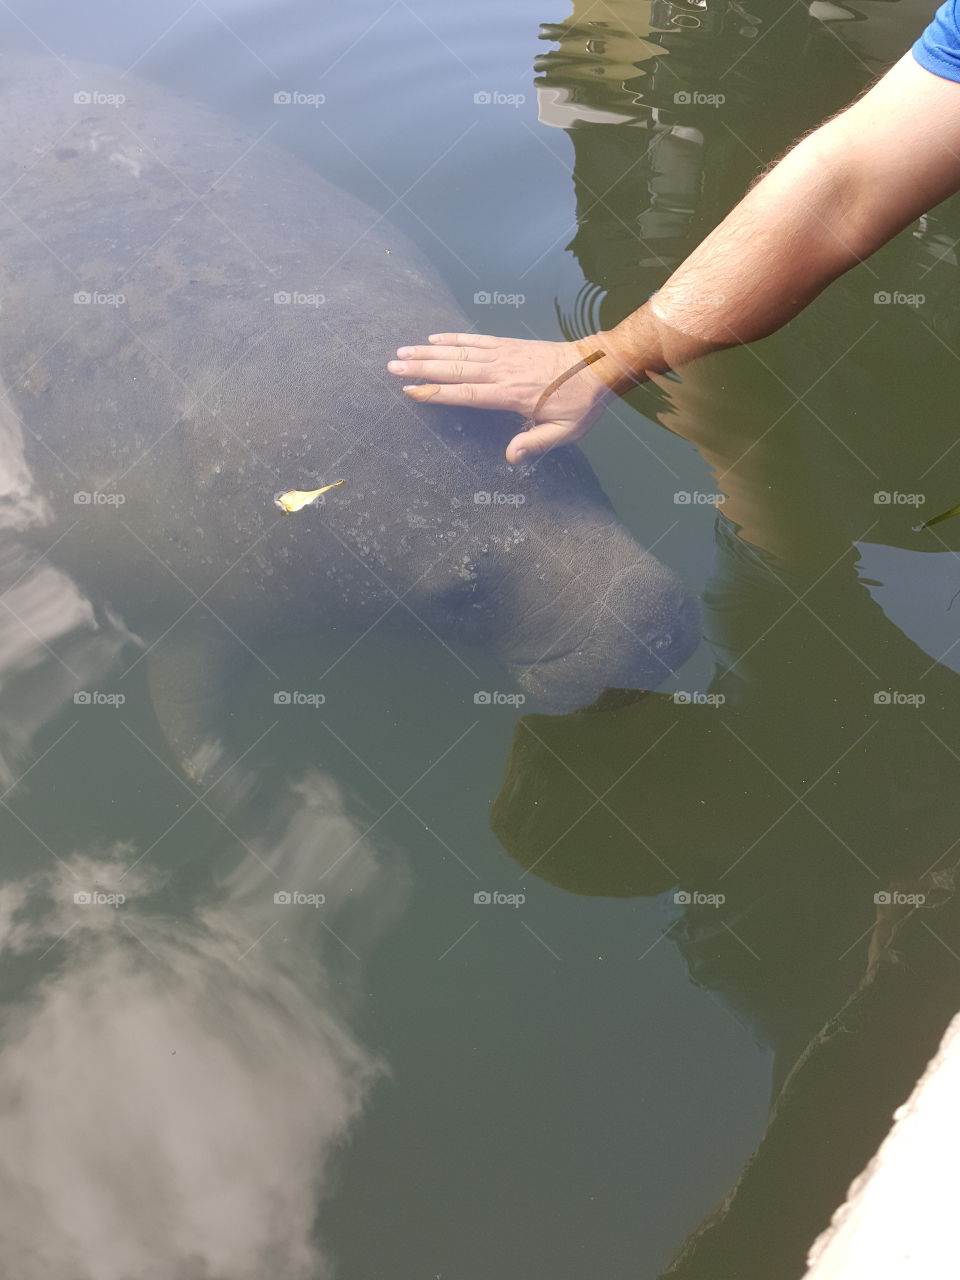 manatee petting in Florida canal